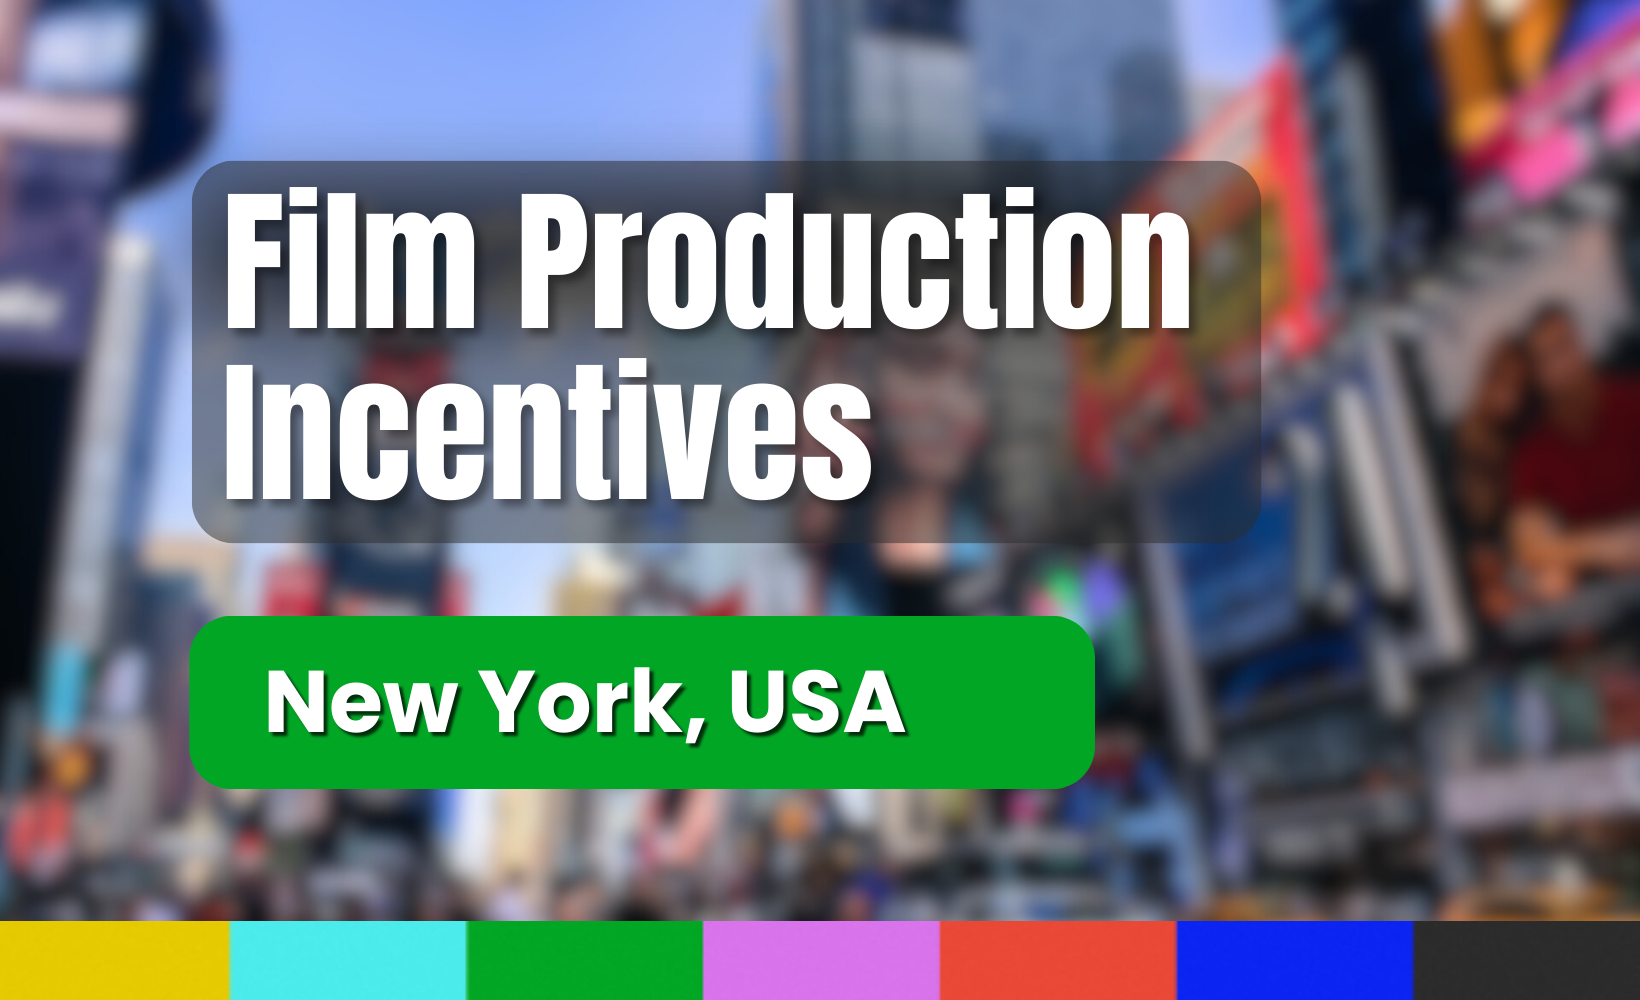 Thumbnail - Film Production Incentives - New York USA